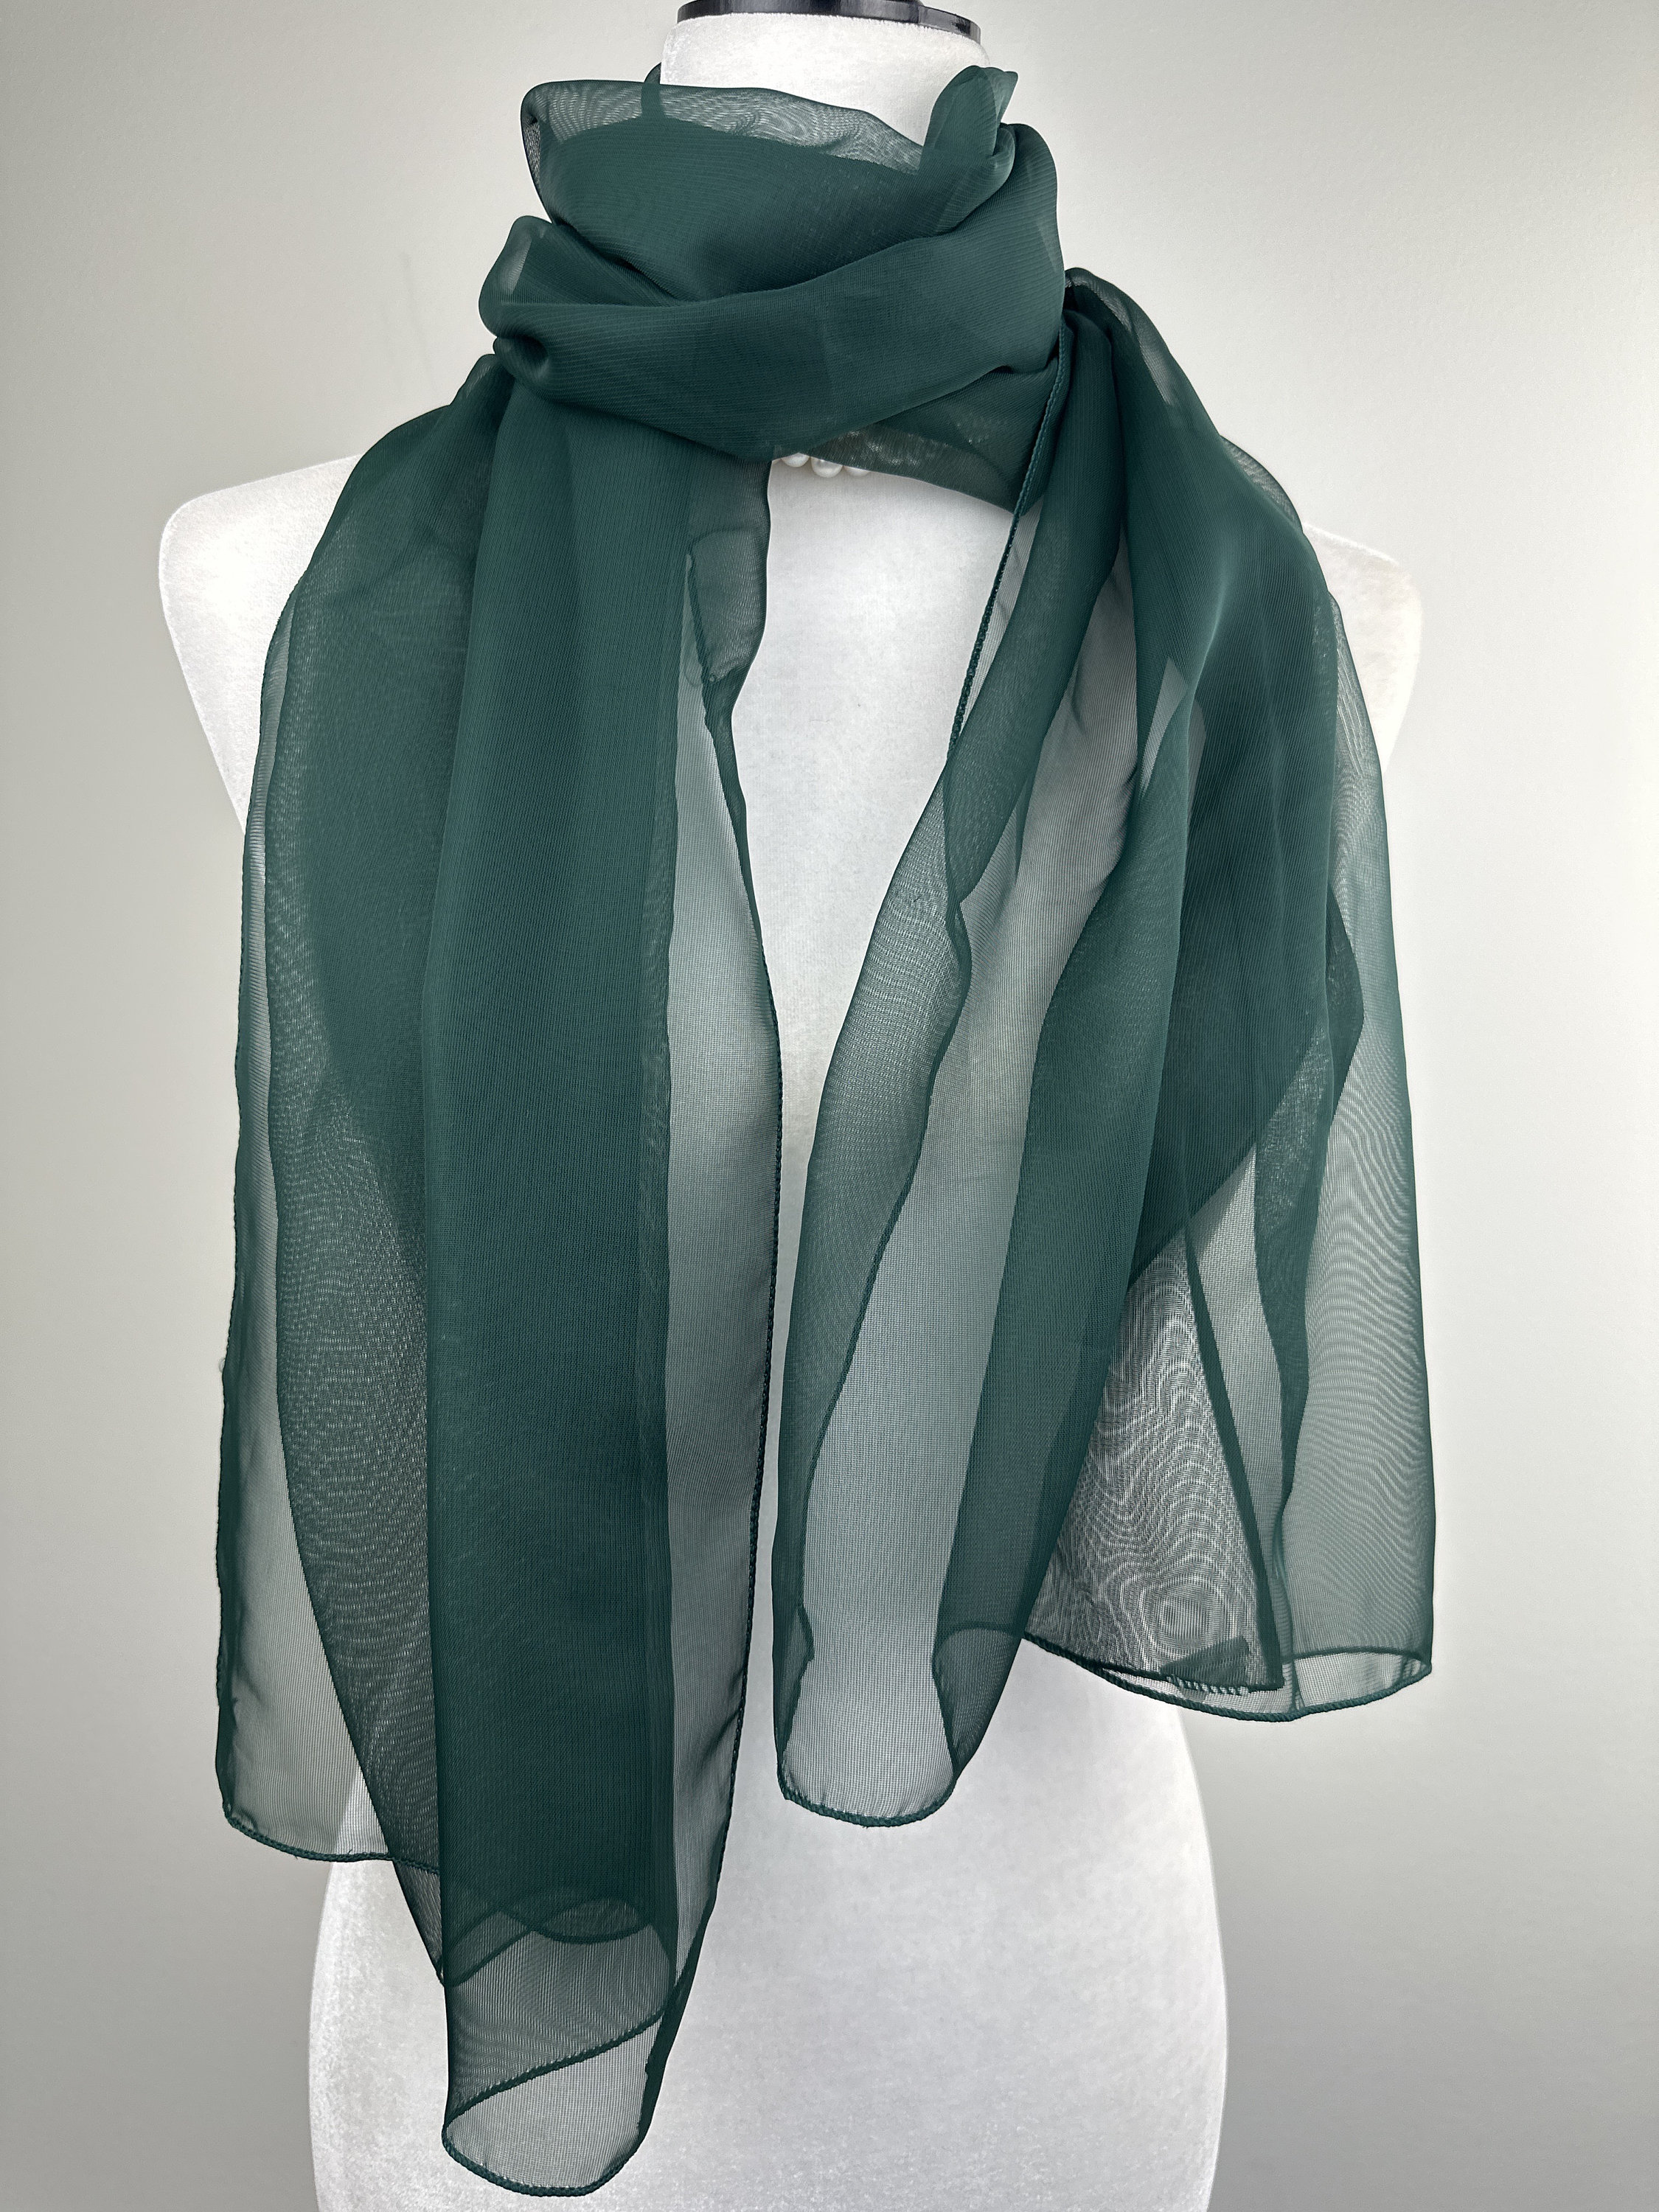 TheMayaShoppeCo369 White Sheer Chiffon Georgette scarf|Fashionable Dressy Formal Shawl|Bridesmaids gifts|Hijab|Shrug|Monogram Personalizable shawl|White Wrap